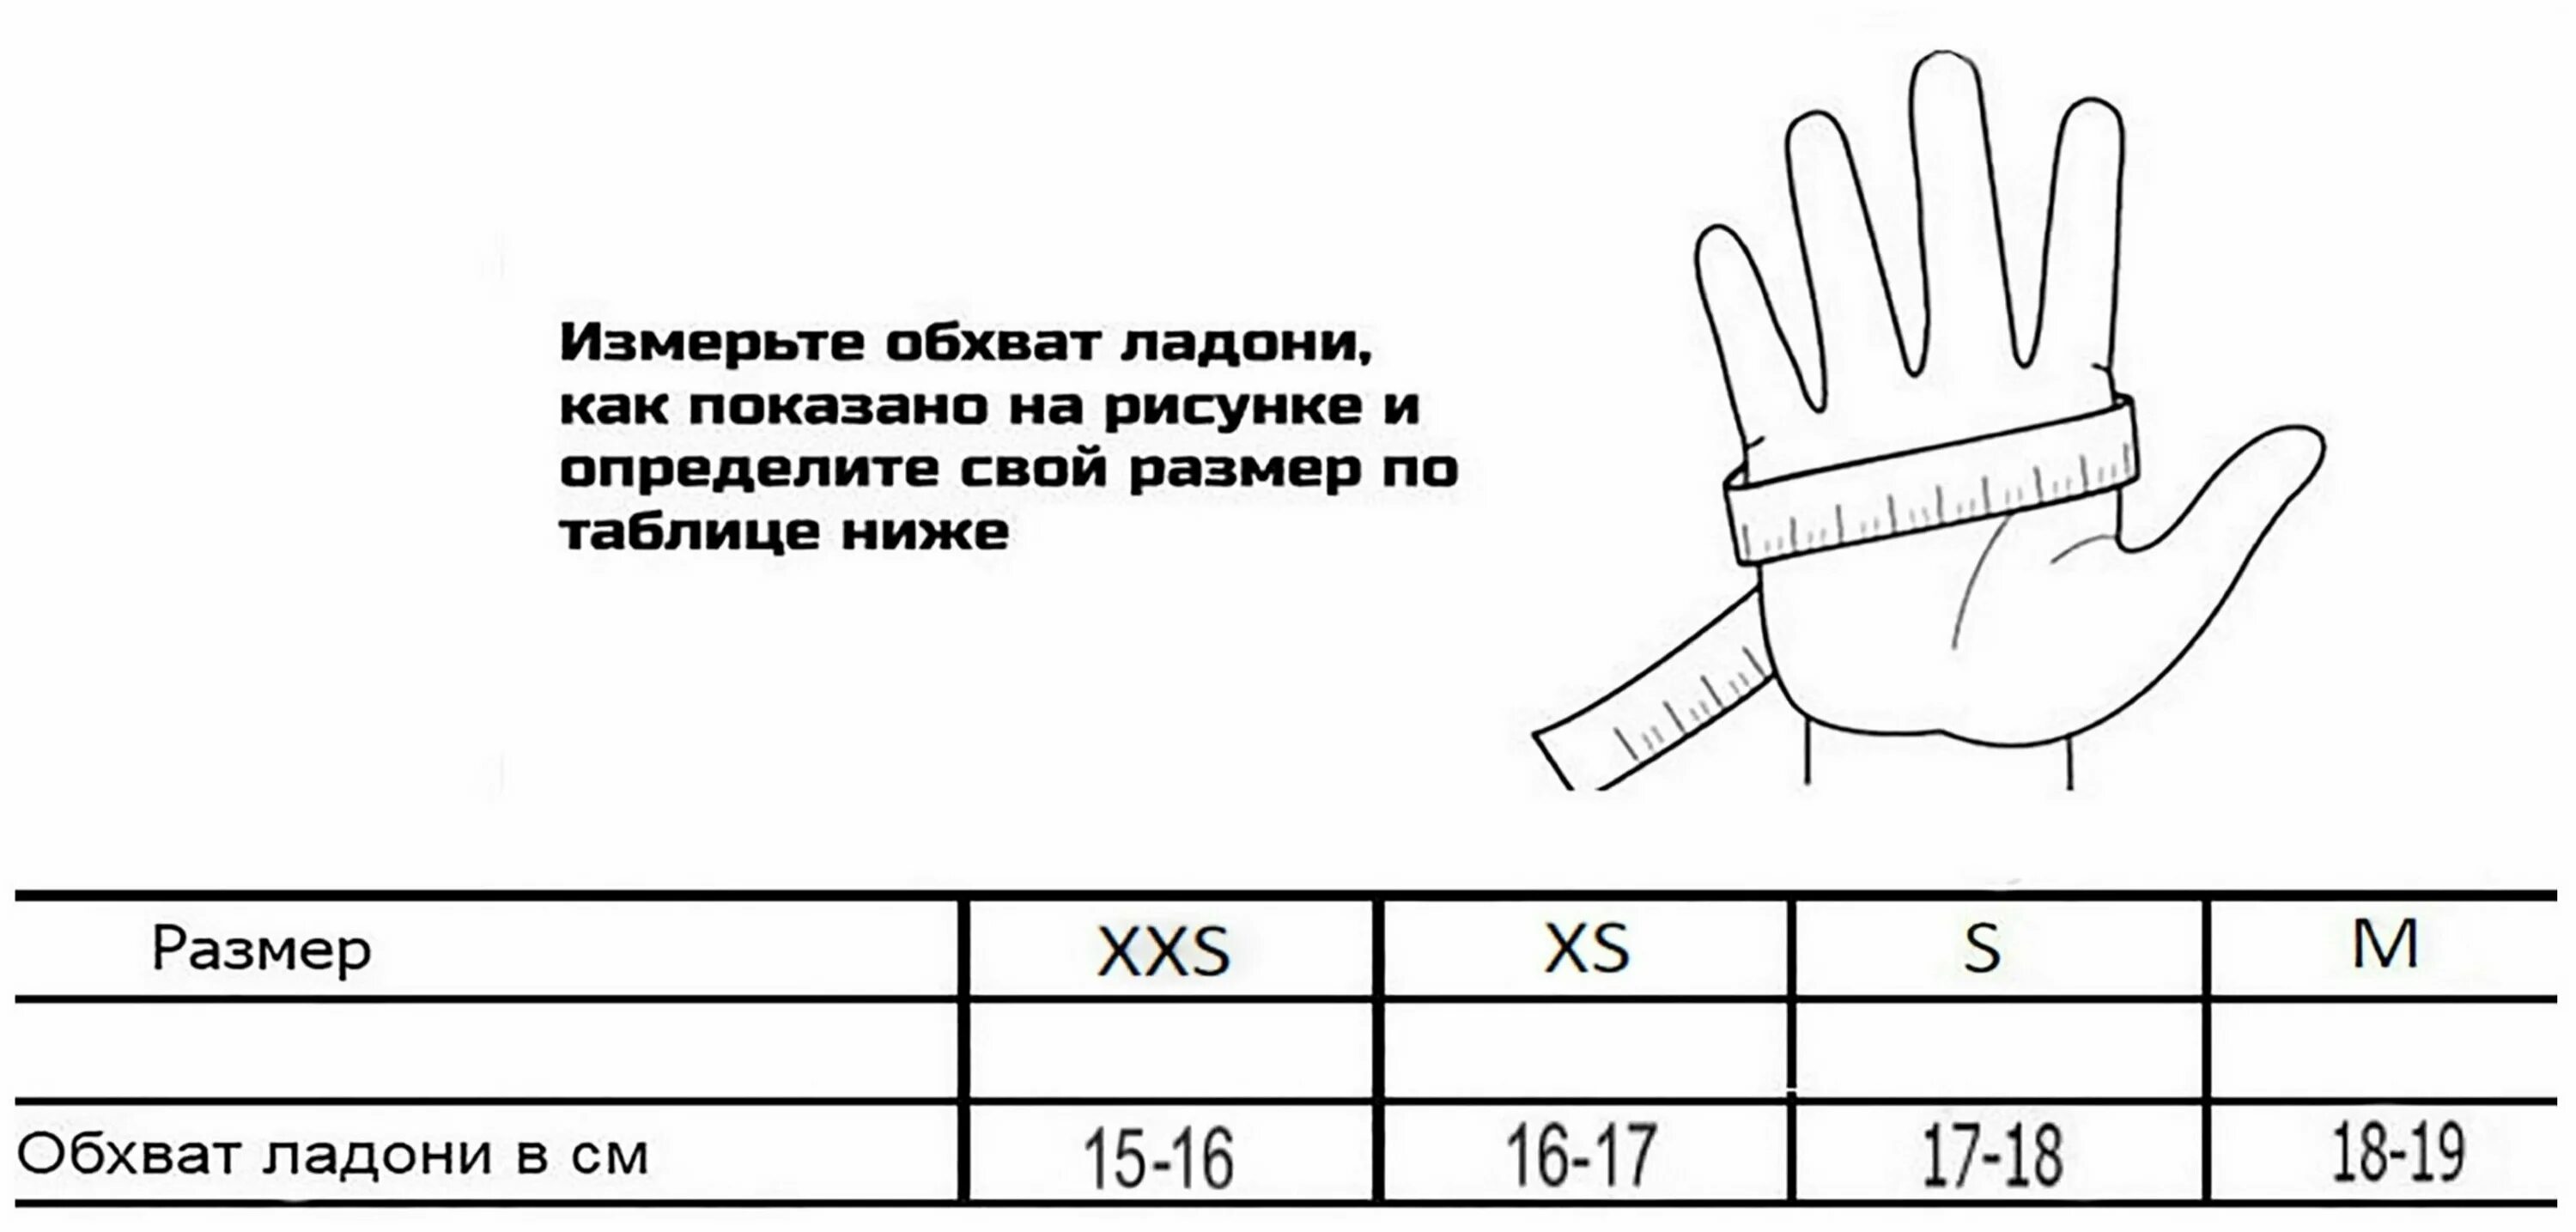 Размер перчаток м или л больше. Размер обхват ладони. Размер перчаток женских таблица. Перчатки размер с обхват. Российский размер перчаток.